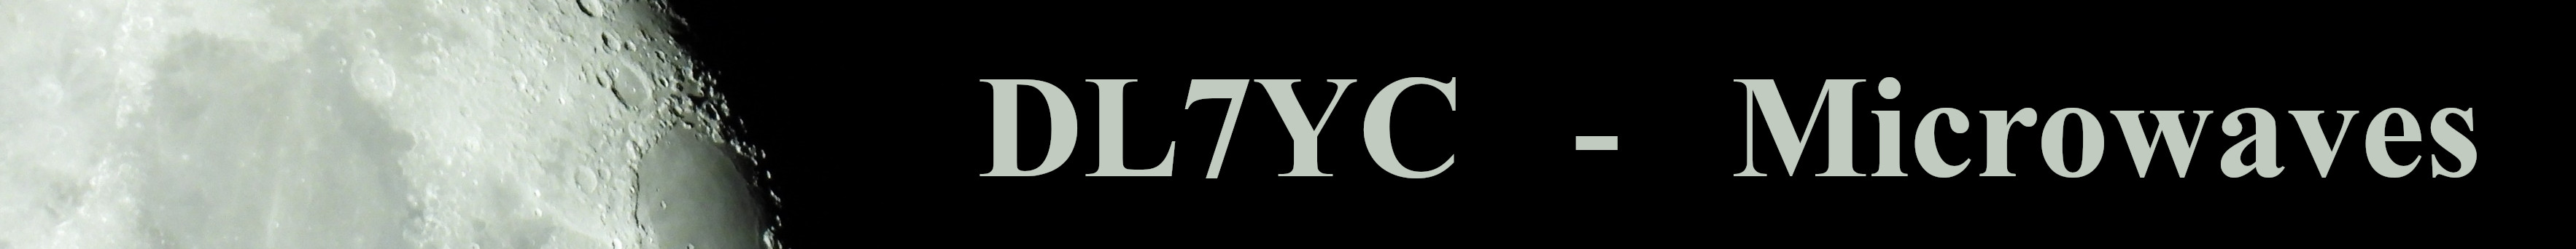 Banner DL7YC